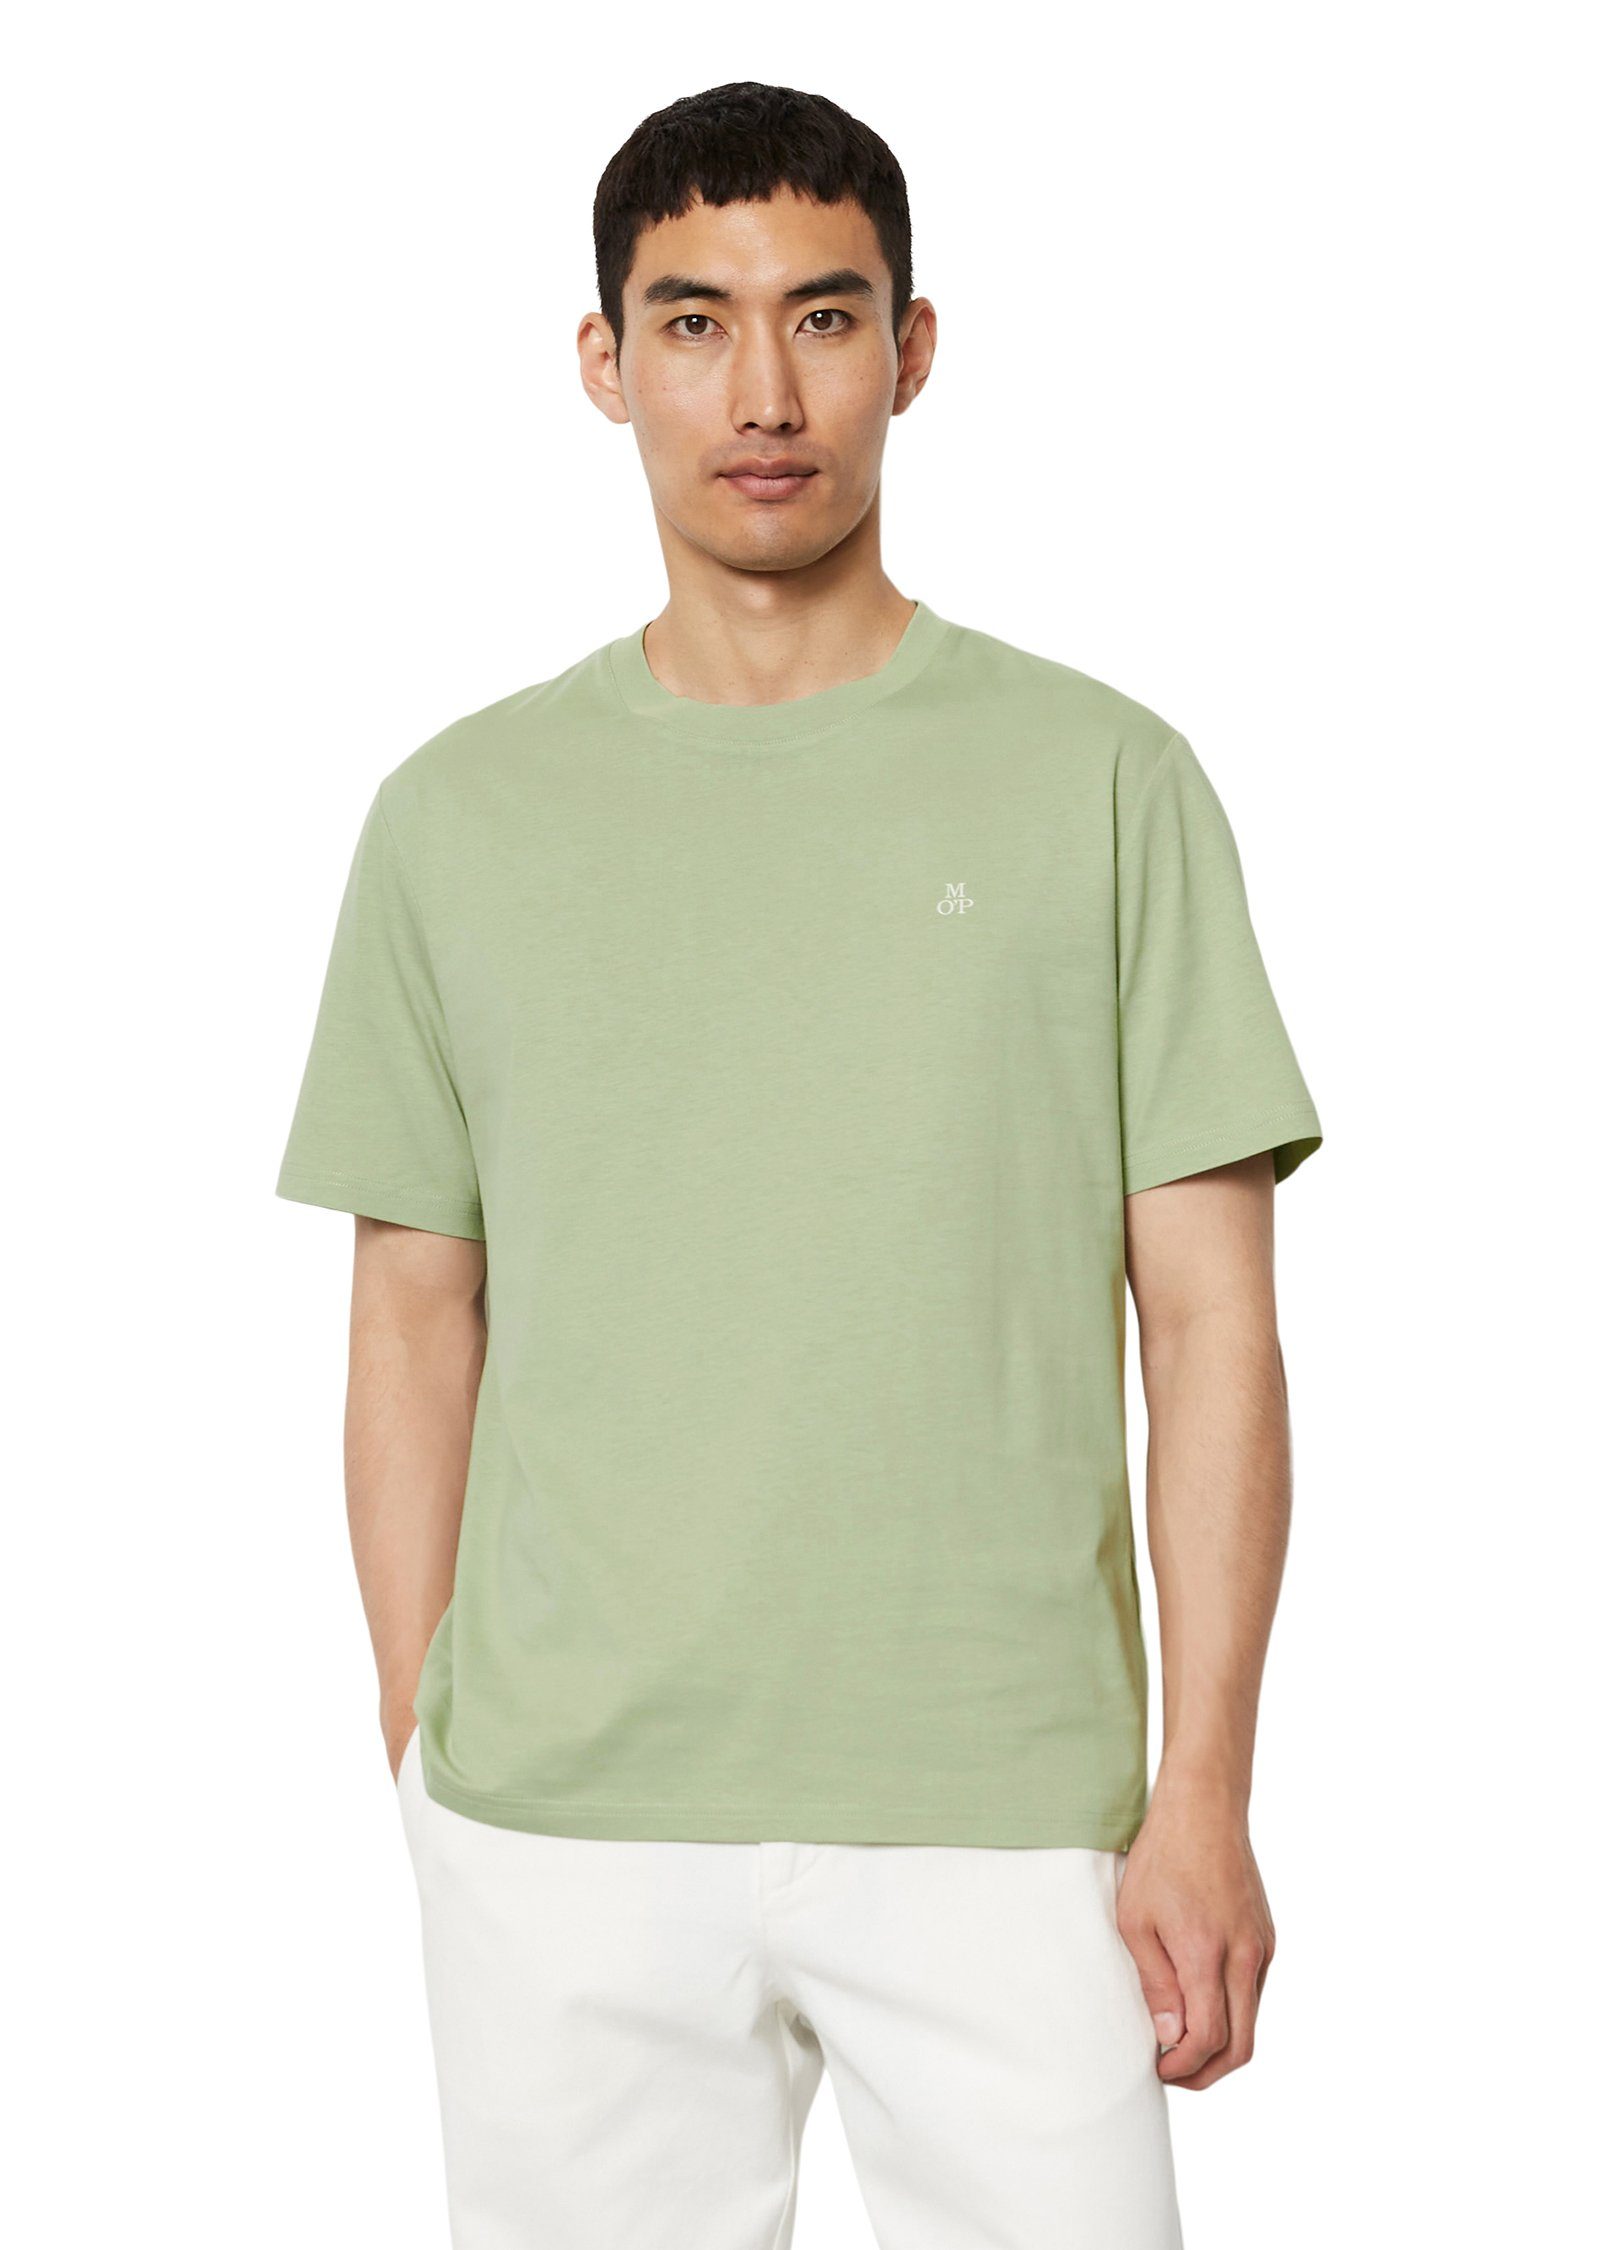 T-shirt, collar short rainee logo ribbed O'Polo T-Shirt Marc sleeve, print,